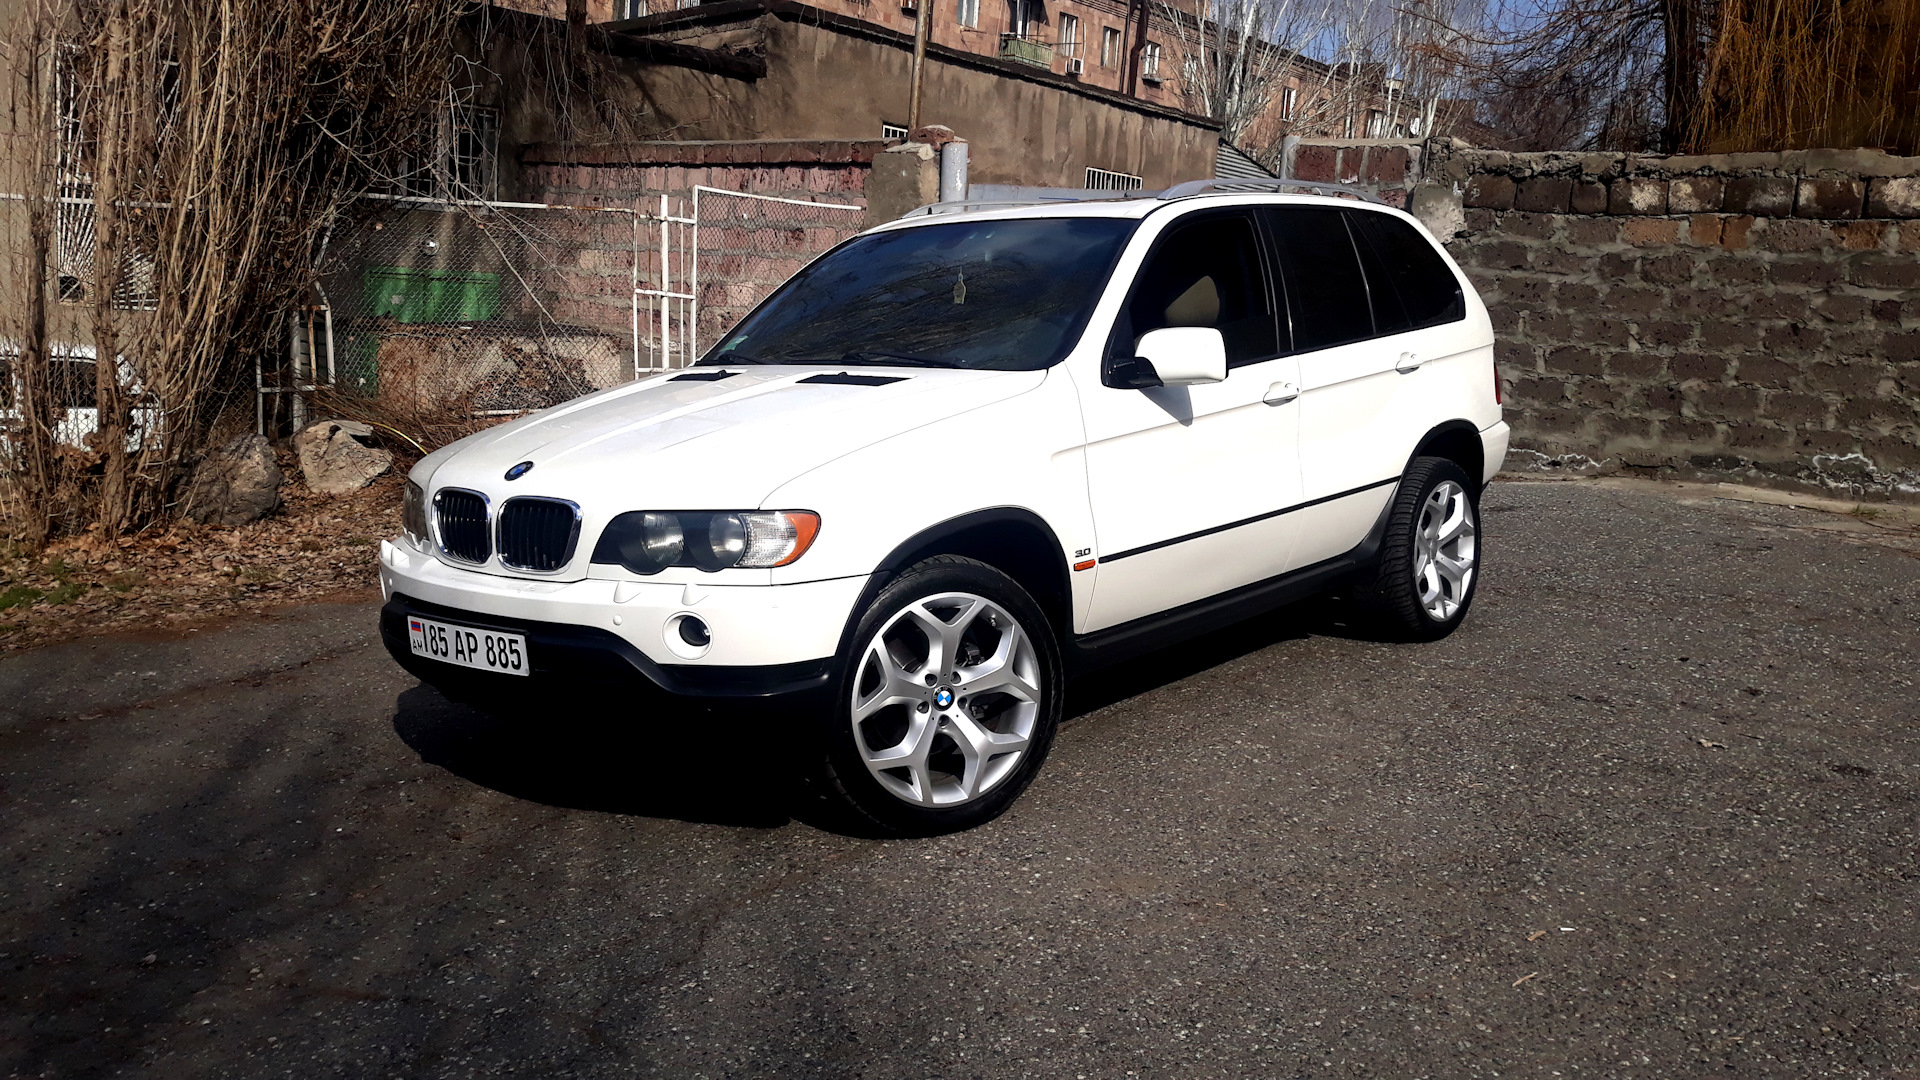 Bmw x5 2003. BMW x5 e53 214 стиль. BMW x5 2003 года. BMW x5 e53 белый. BMW e53 214 стиль.